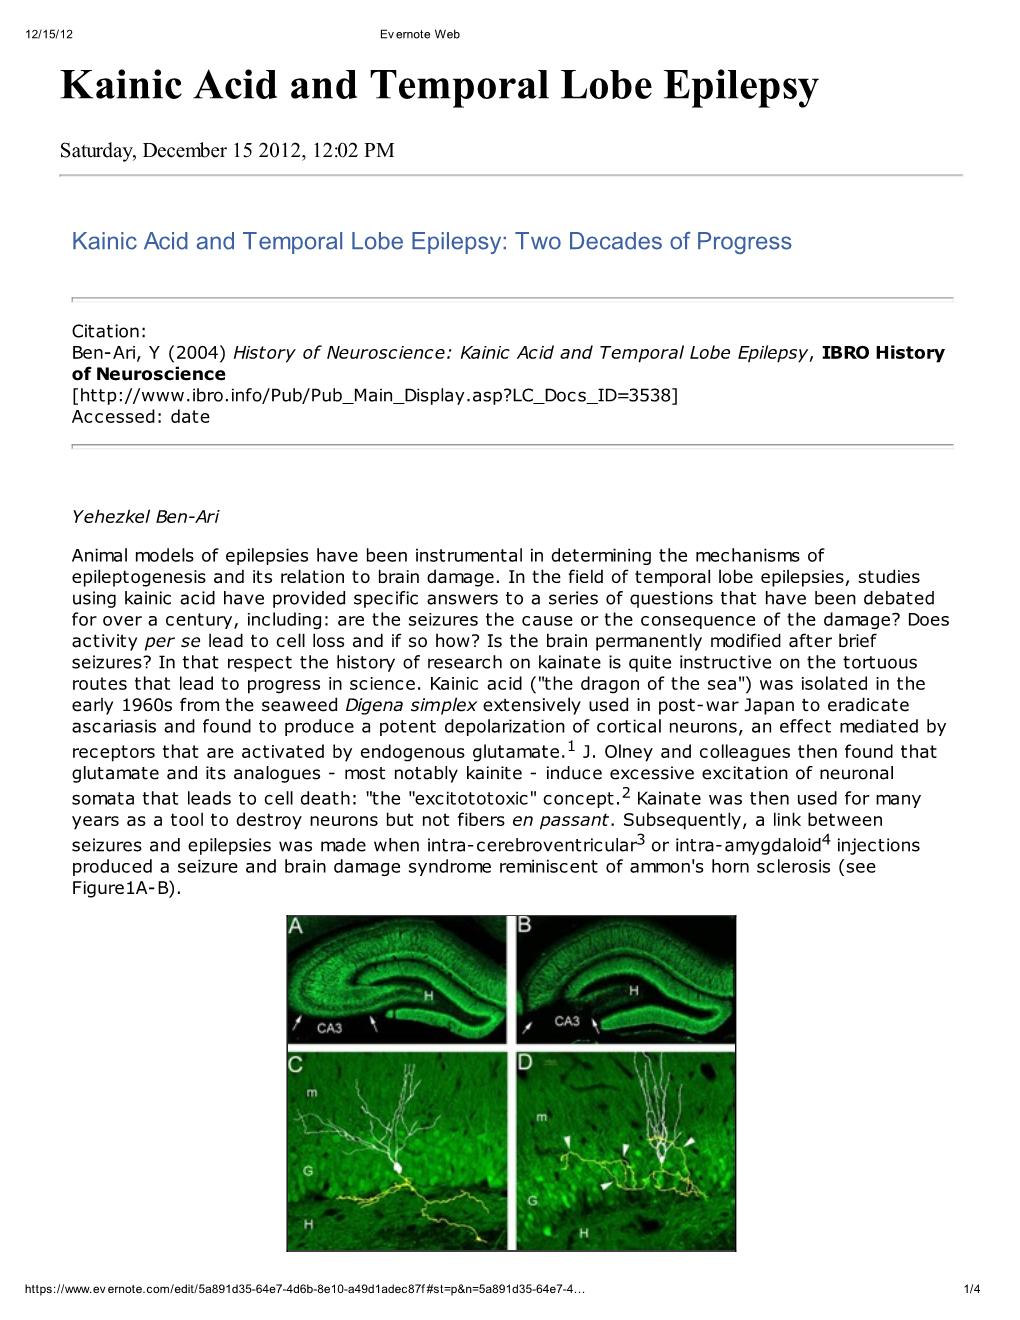 Kainic Acid and Temporal Lobe Epilepsy